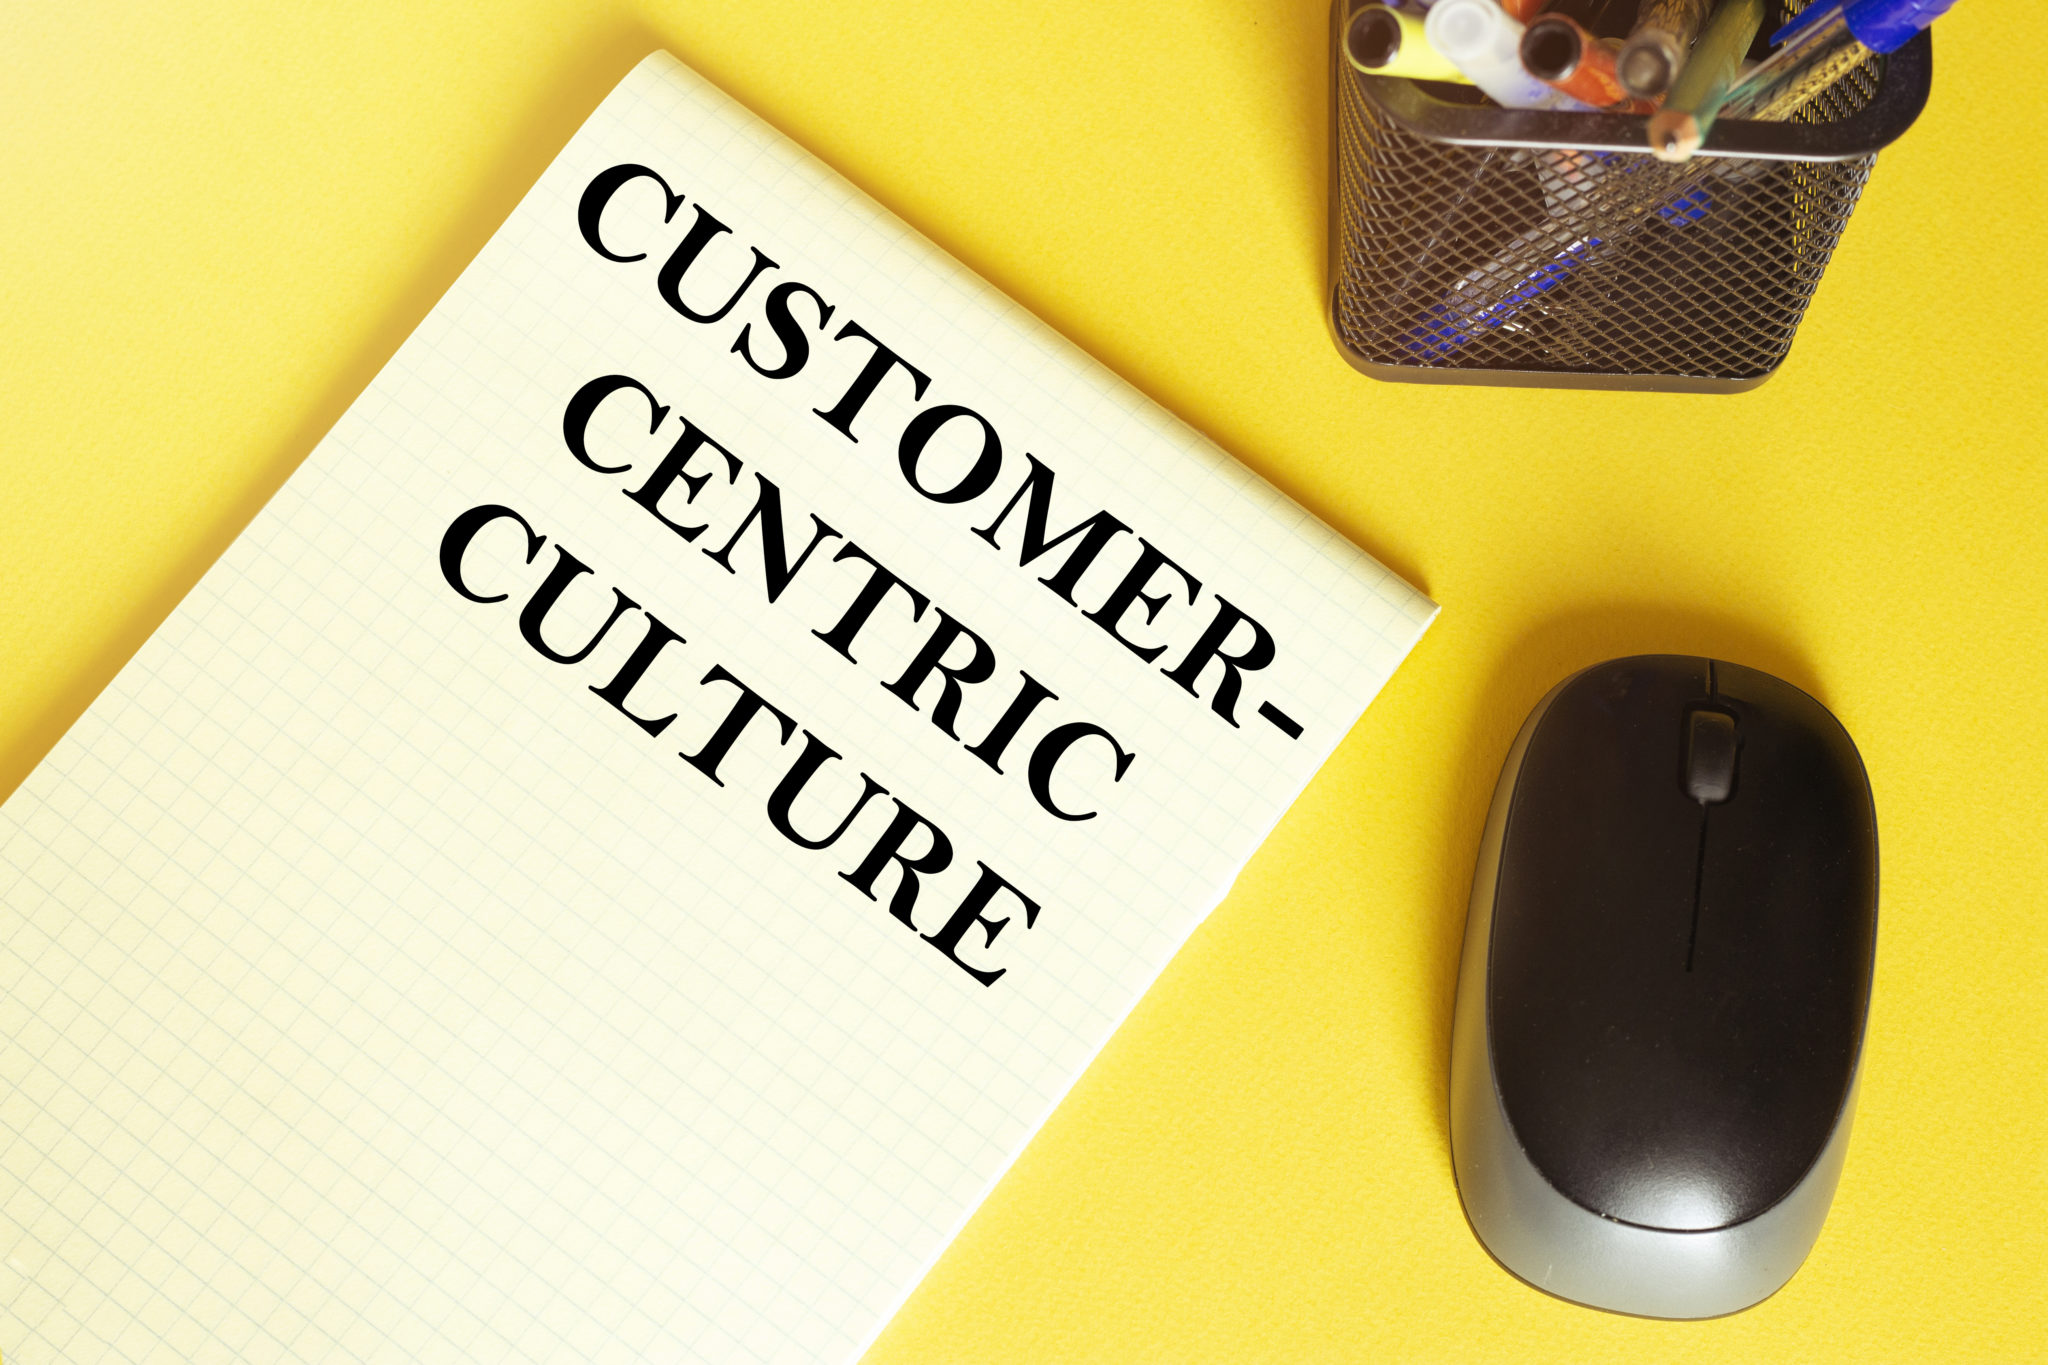 Champion a Customer-Centric Culture